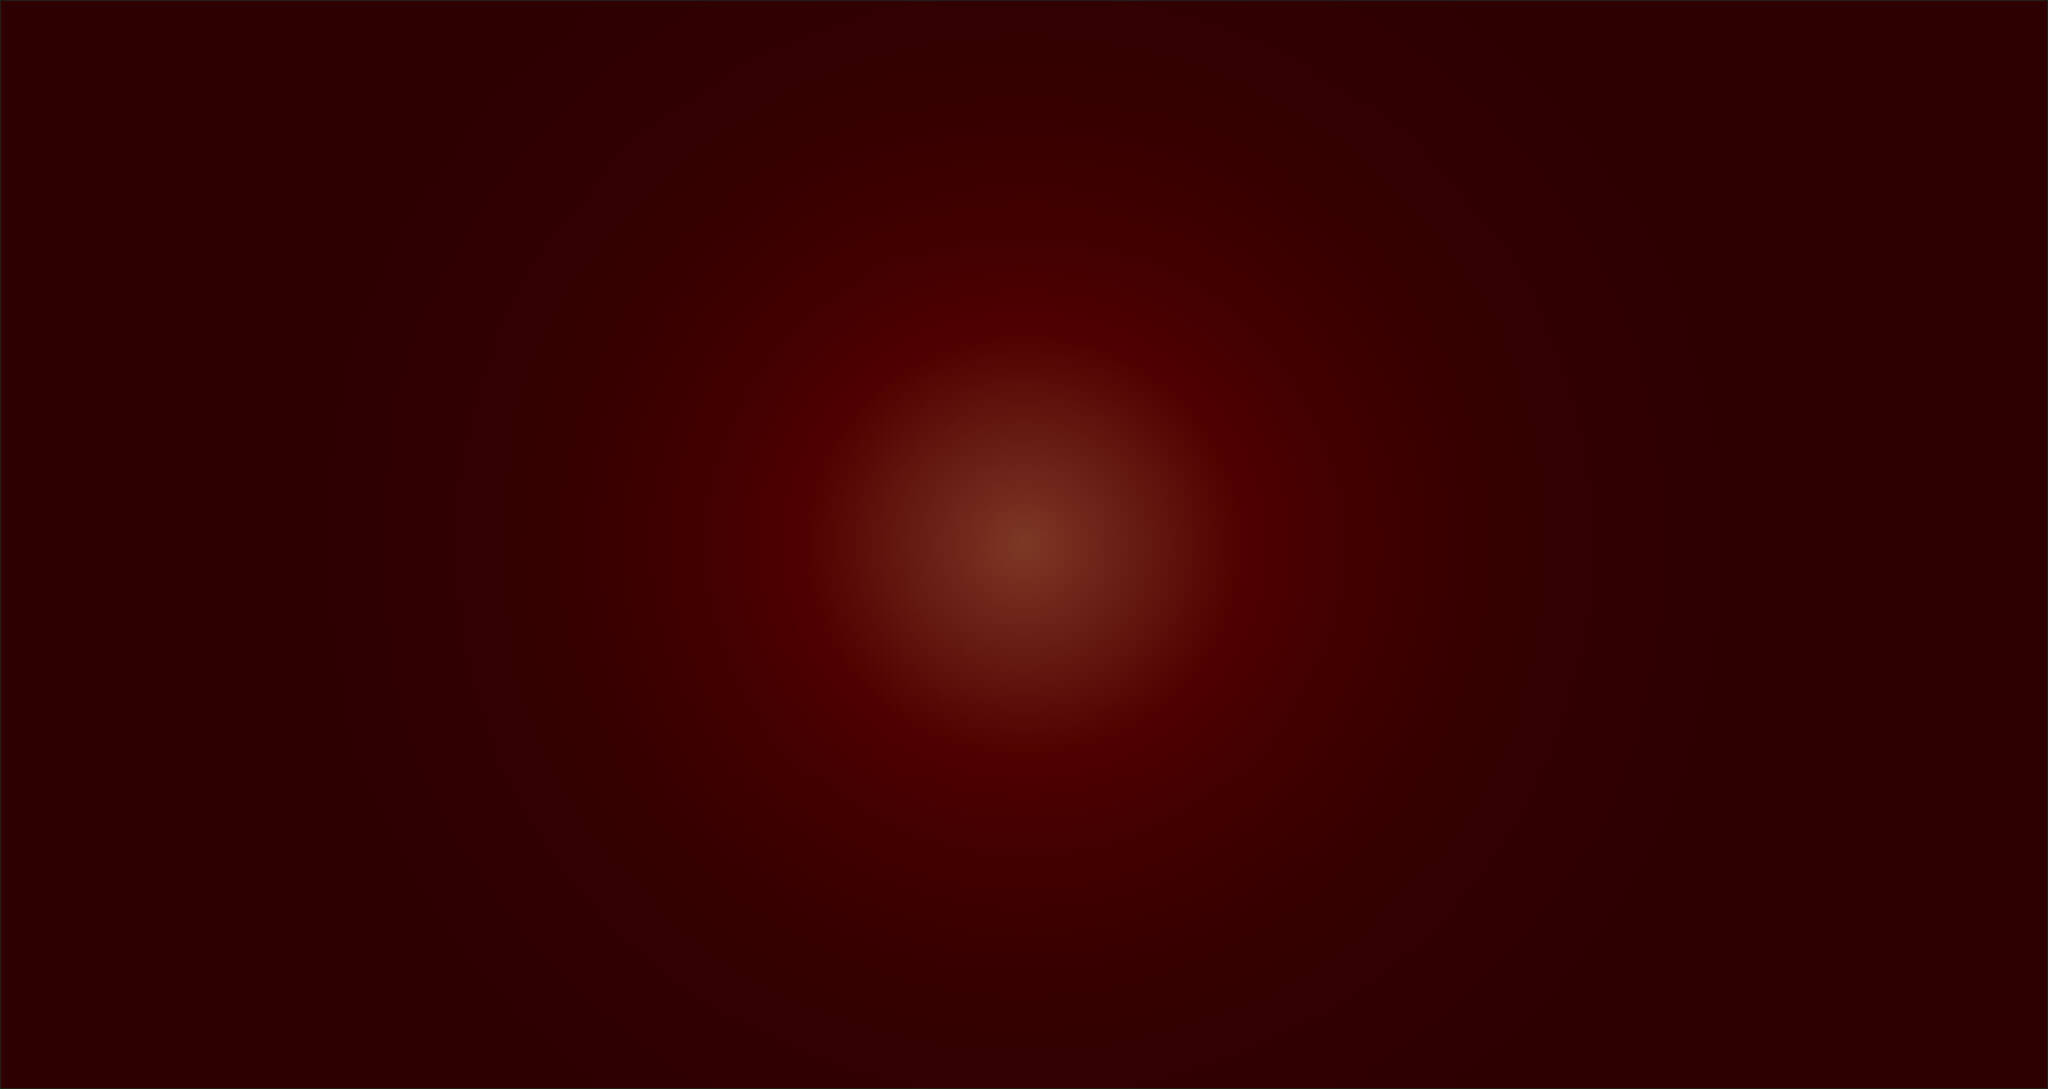 10mfh-background-red2.jpg